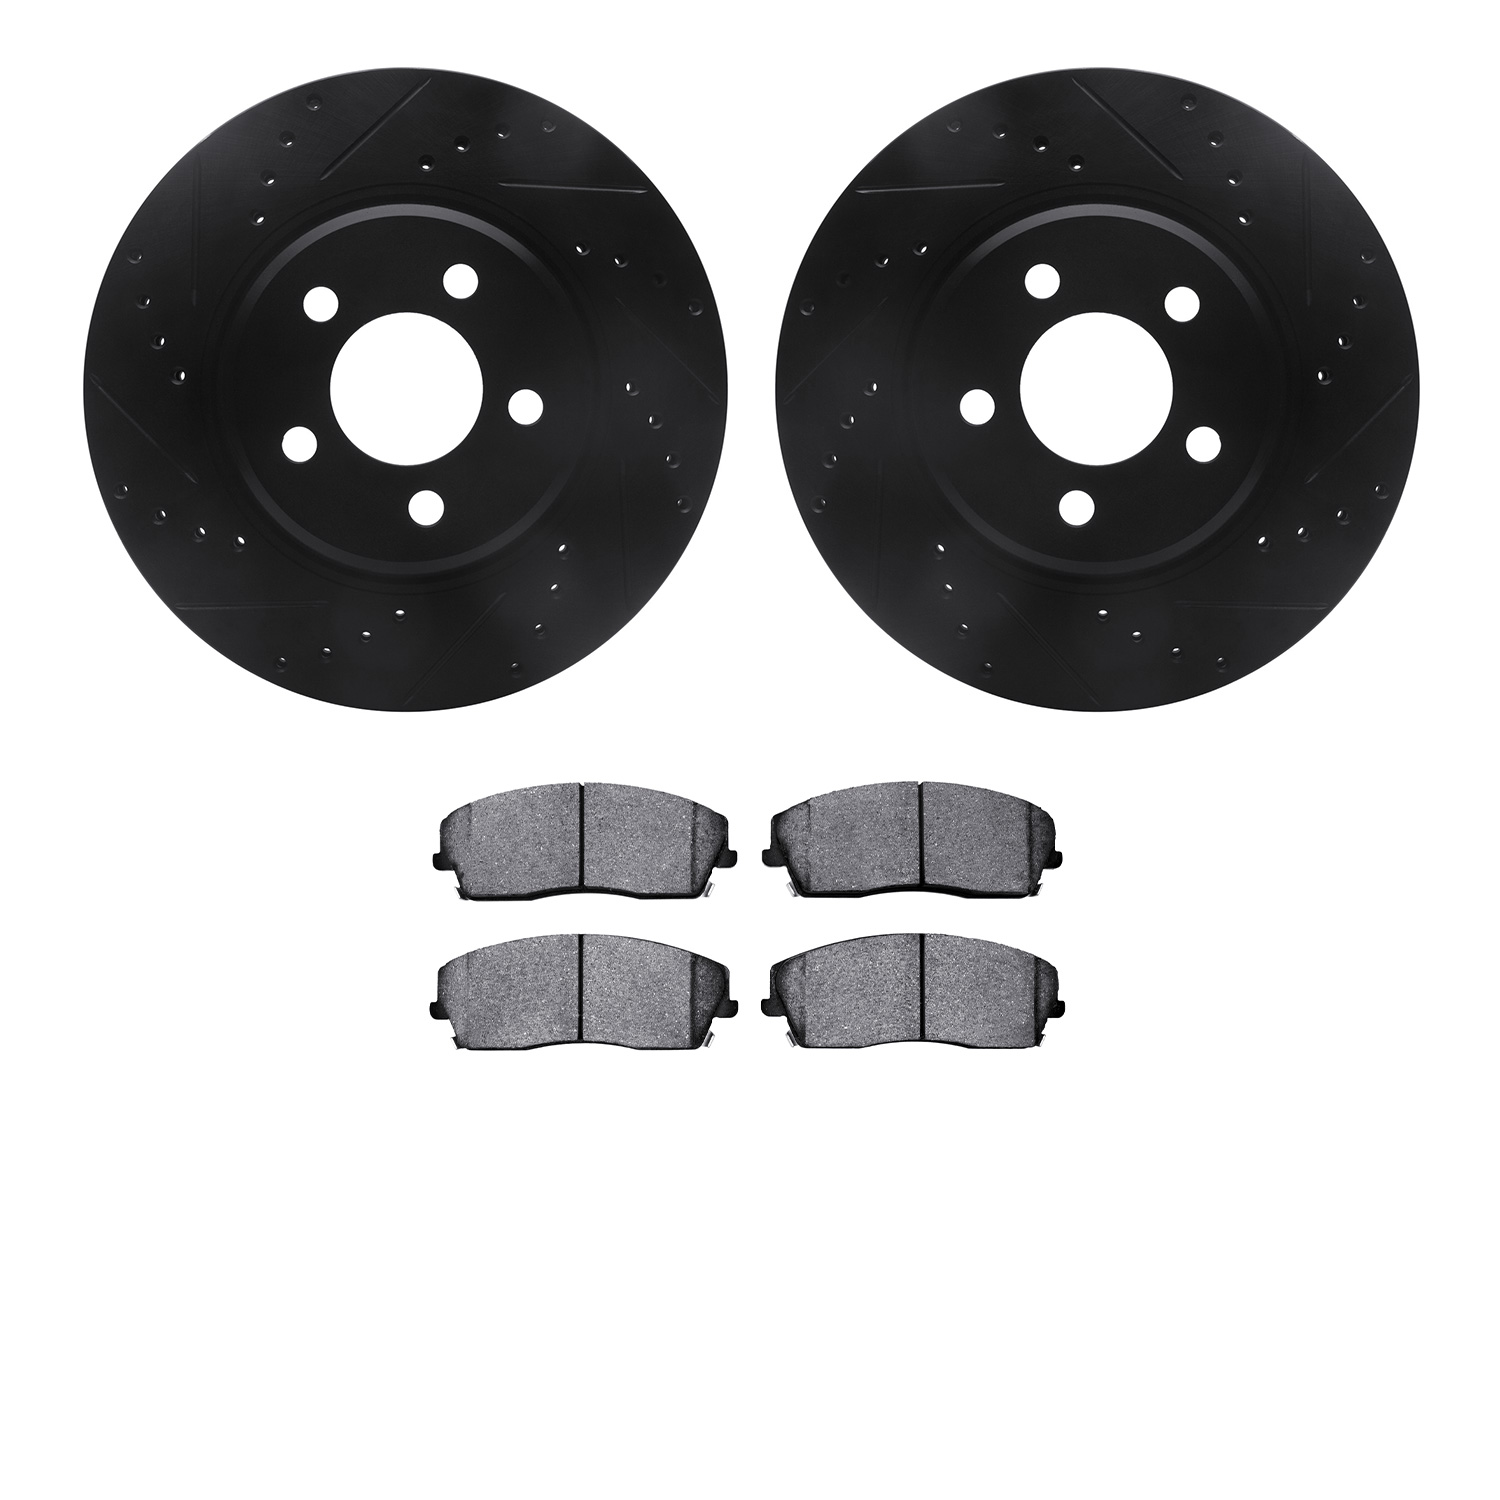 8302-39033 Drilled/Slotted Brake Rotors with 3000-Series Ceramic Brake Pads Kit [Black], Fits Select Mopar, Position: Front